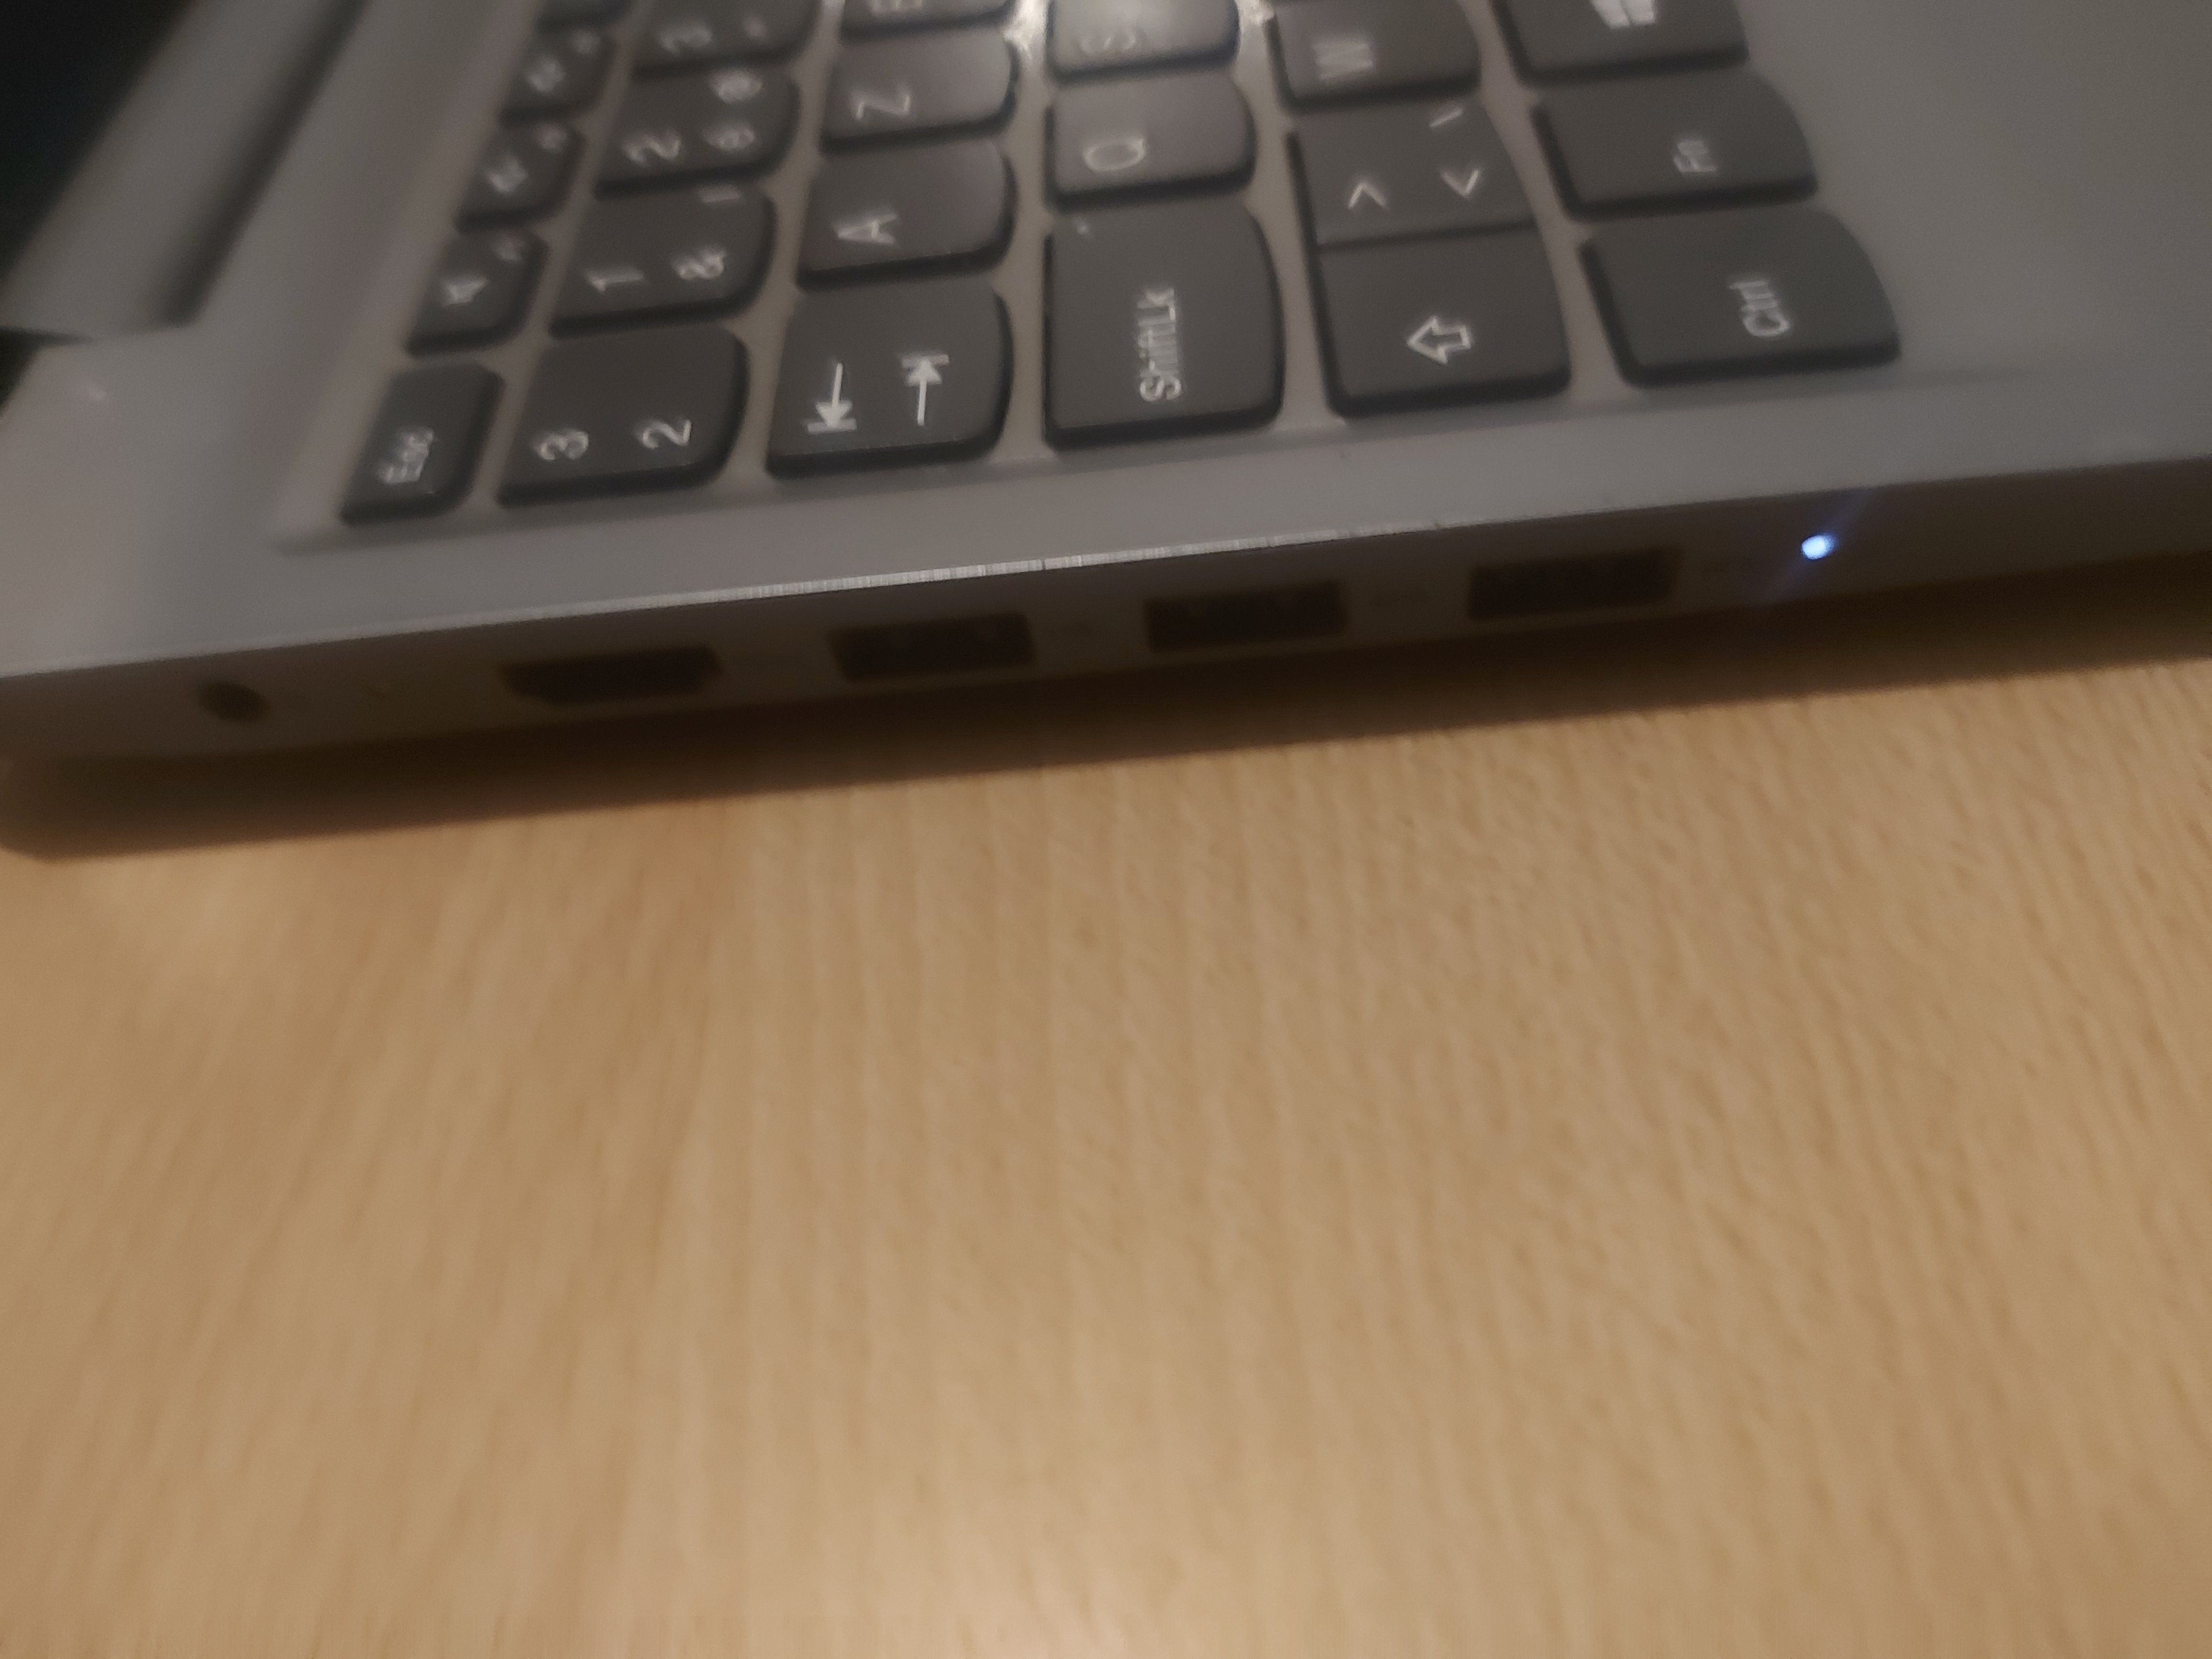 Joseph Banks Dader Garderobe zwart scherm op lenovo laptop - Microsoft Community